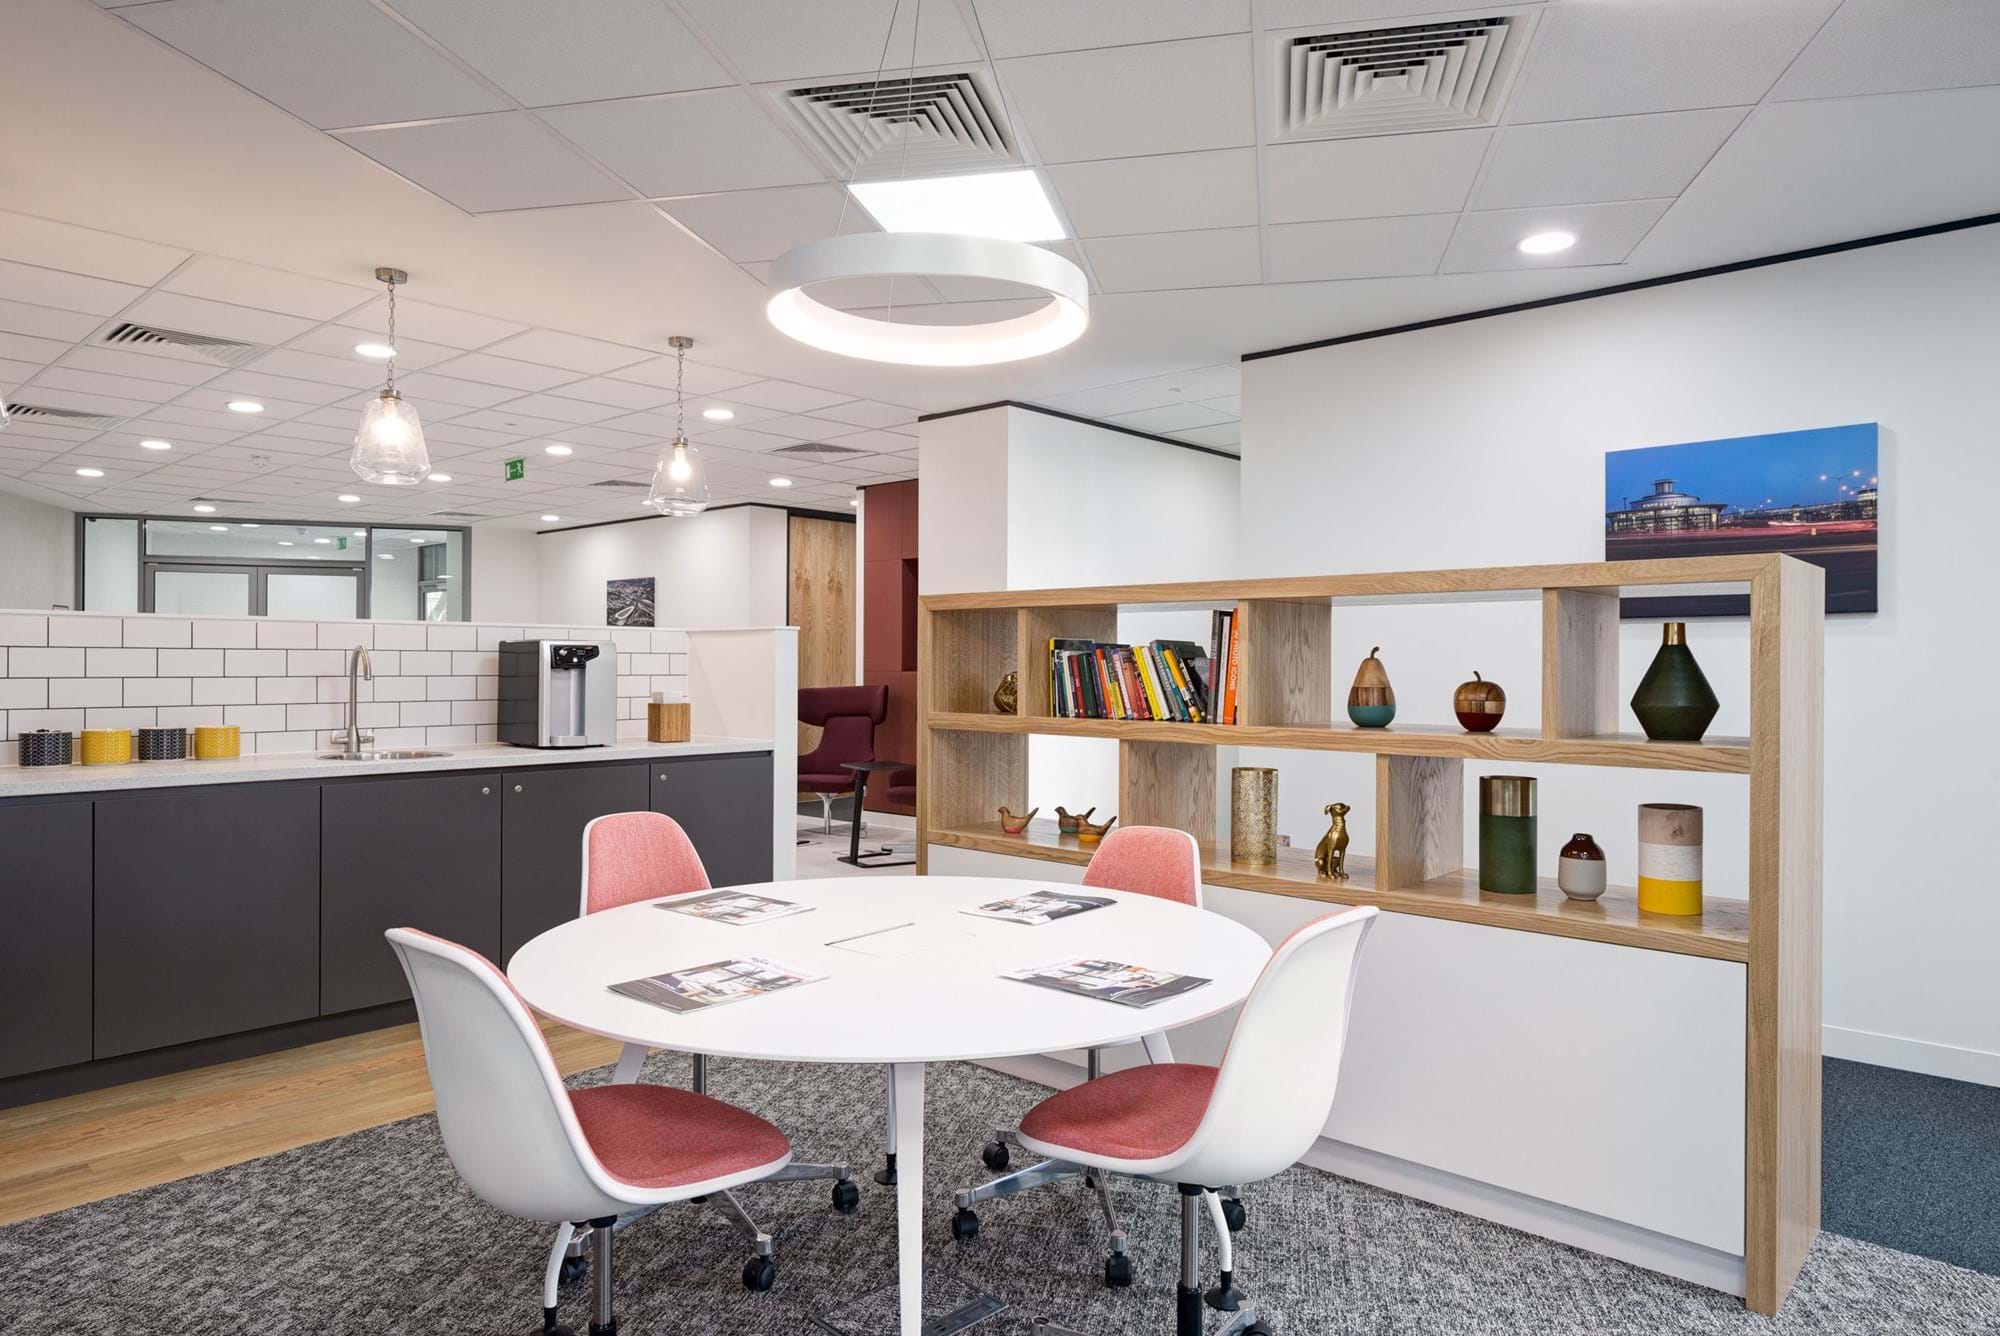 Modus Workspace office design, fit out and refurbishment - Regus Ashford - Regus Ashford 06 highres sRGB.jpg